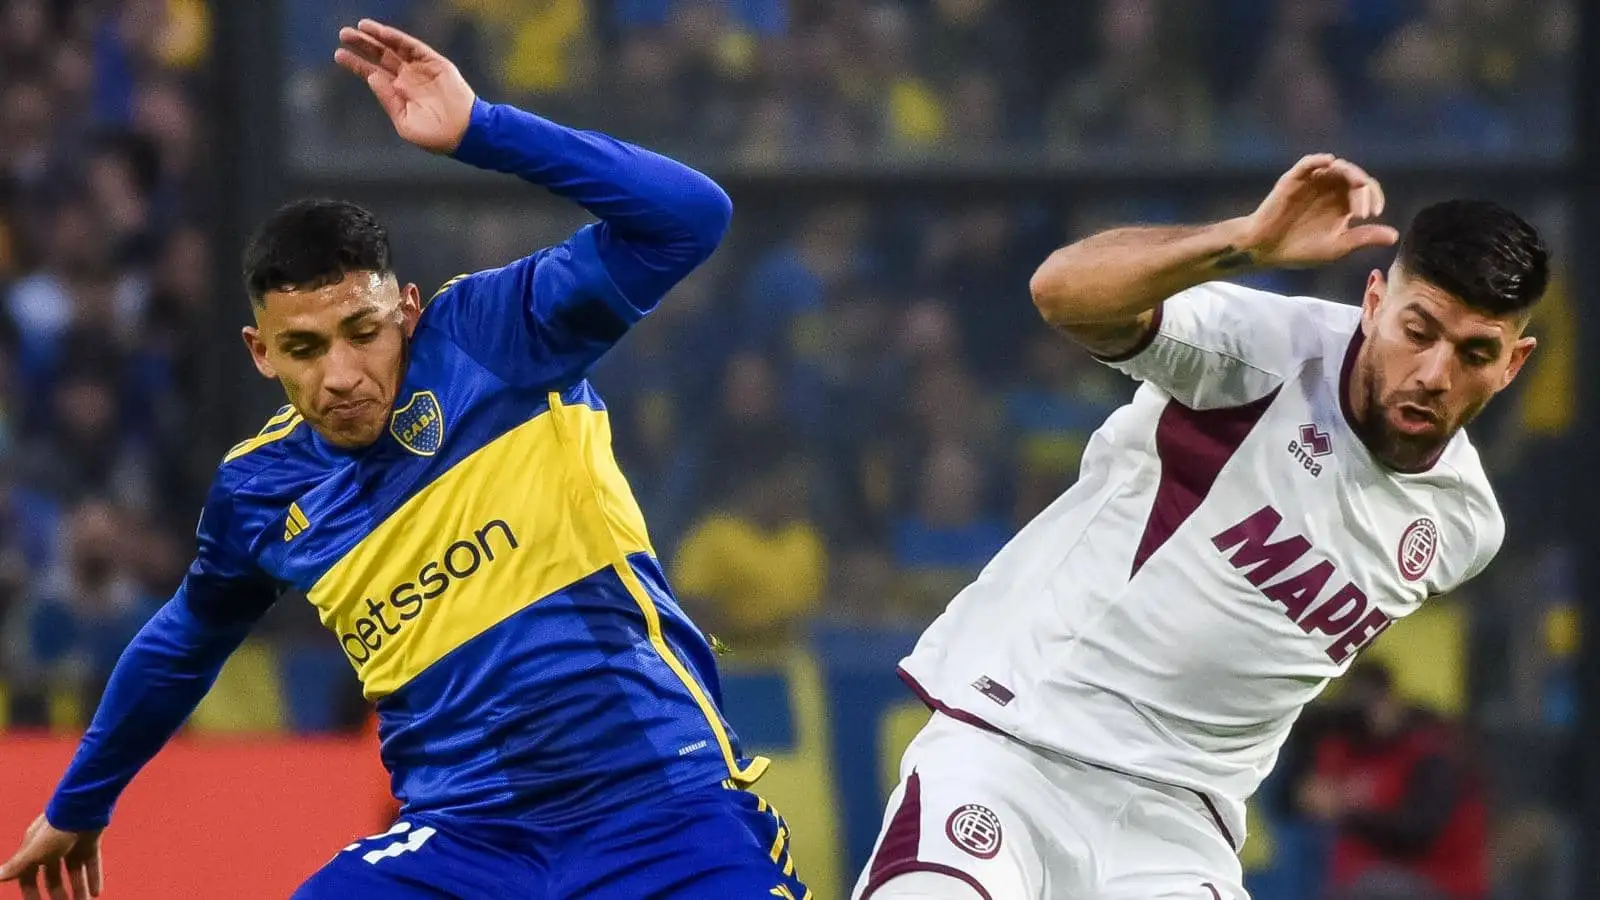 Boca Juniors midfielder Ezequiel Fernandez and Lanus forward Leandro Diaz